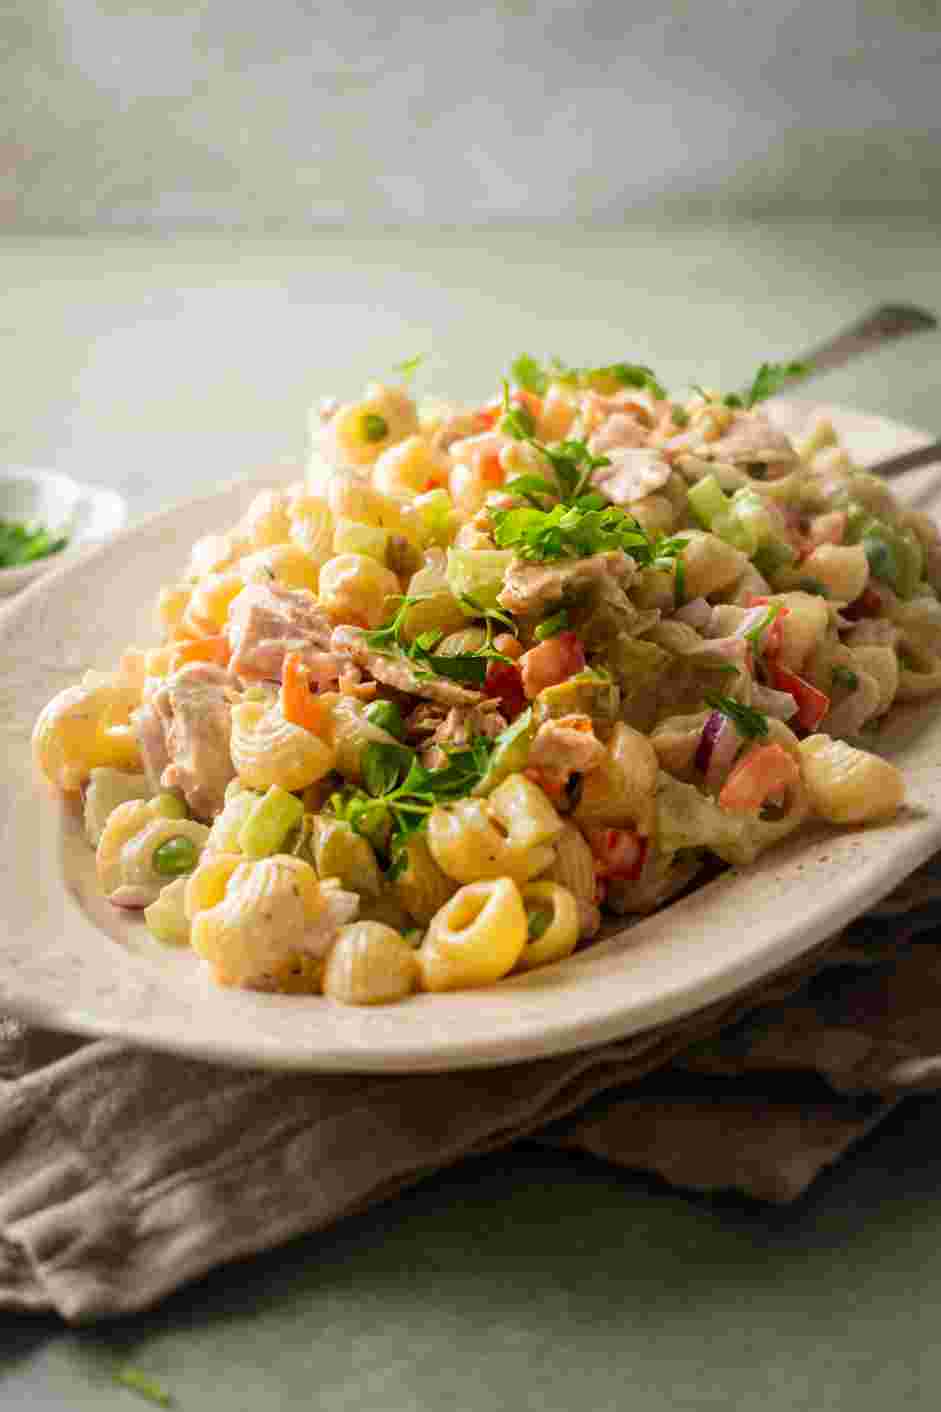 Tuna Pasta Salad Recipe: Garnish with fresh parsley before serving.